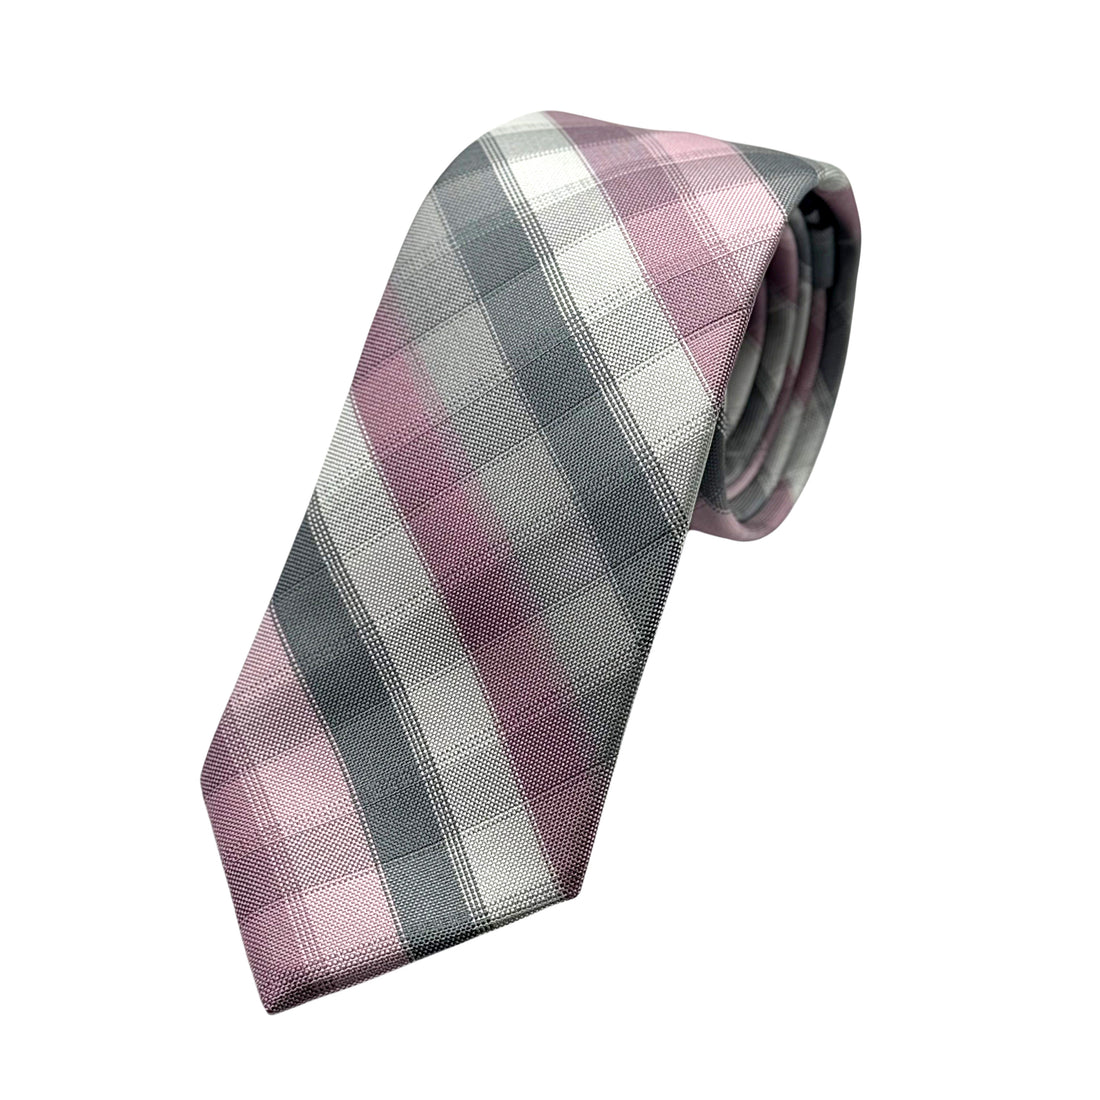 James Adelin Mens Luxury Microfibre Neck Tie in Textured Check Weave Design